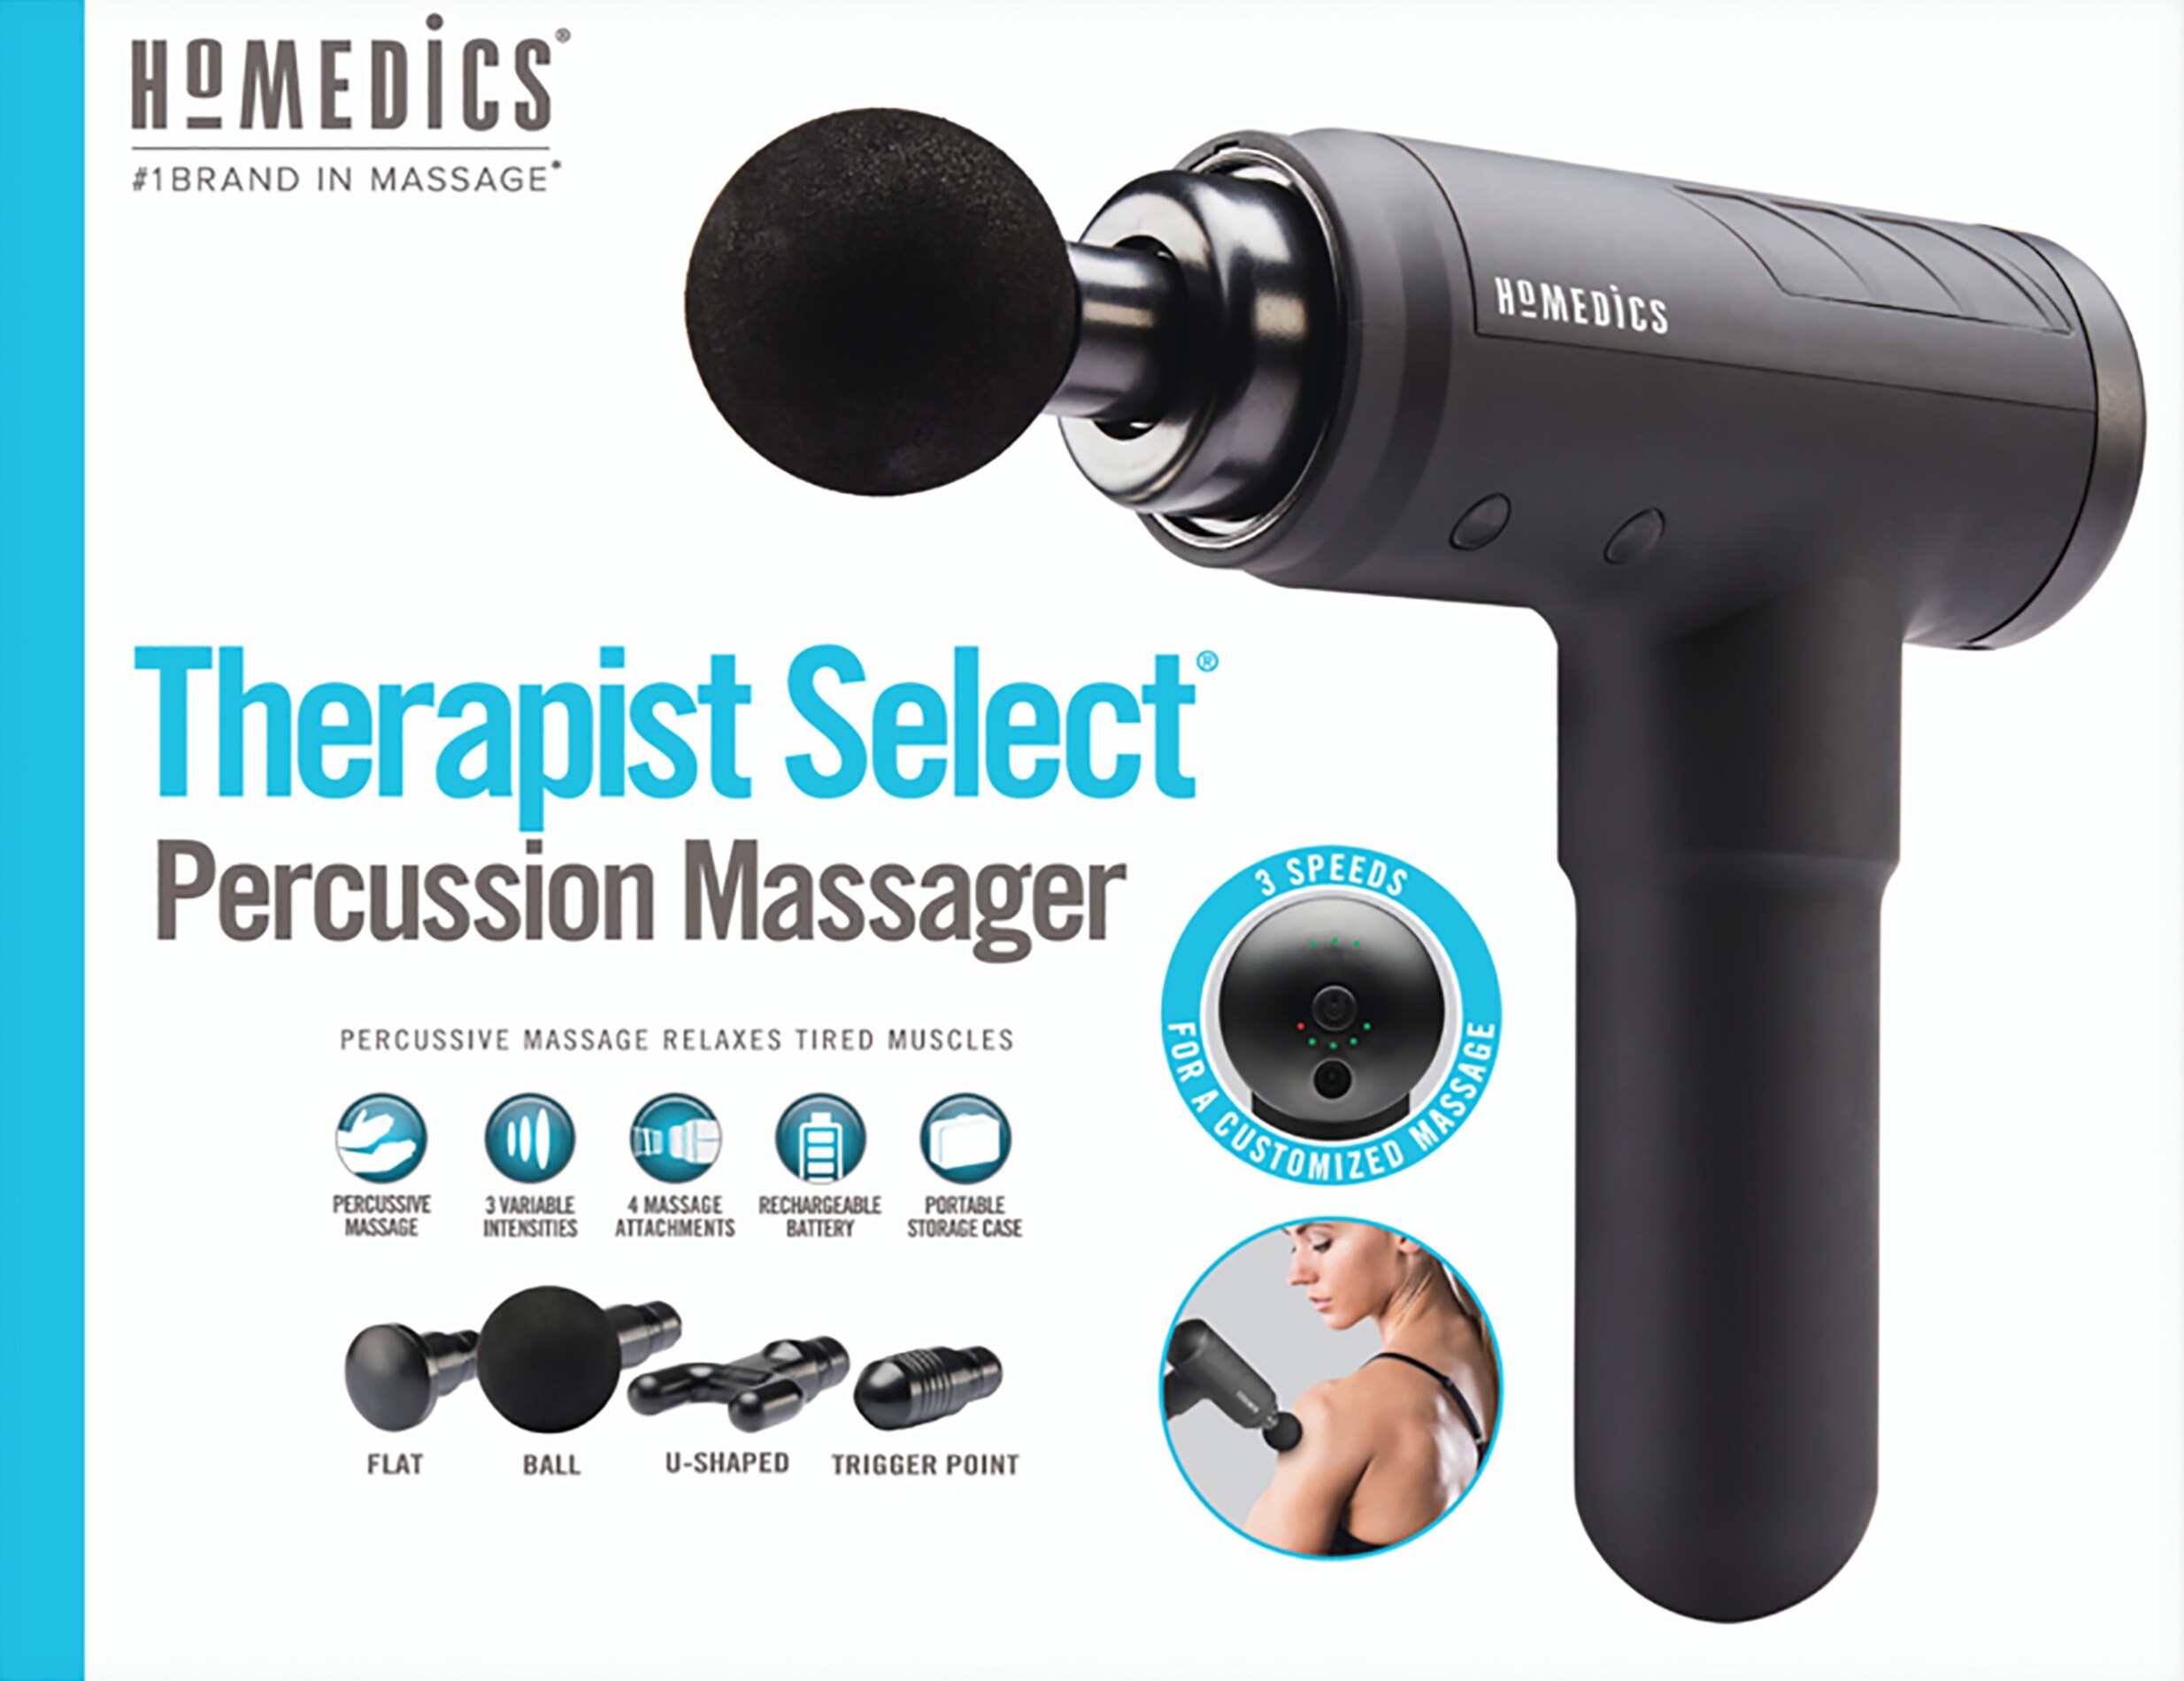 PR Pro Advantage Percussion Massage Device Highlight Video 